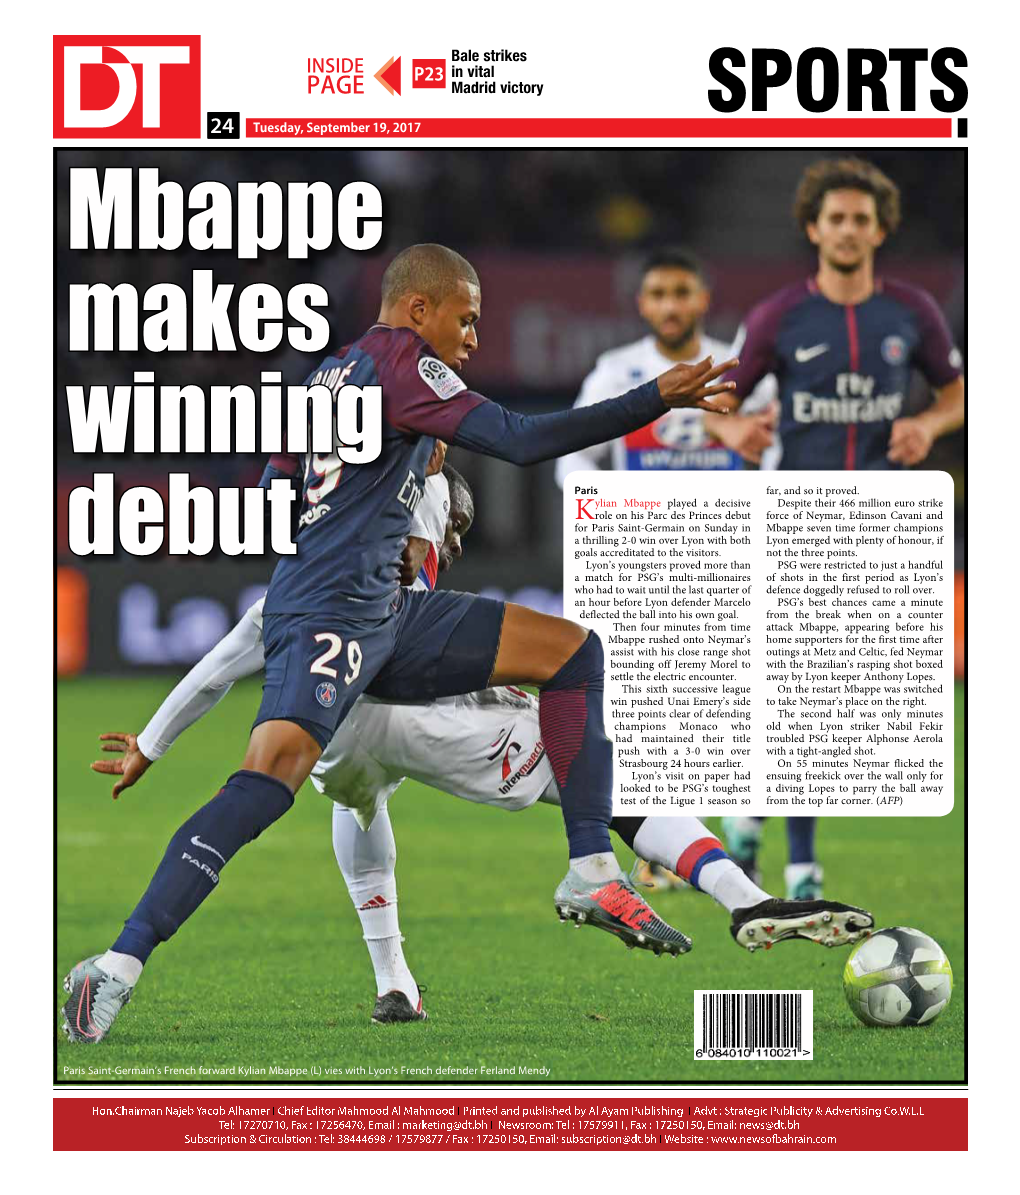 SPORTS 2424 Tuesday, September 19, 2017 Mbappe Makes Winning